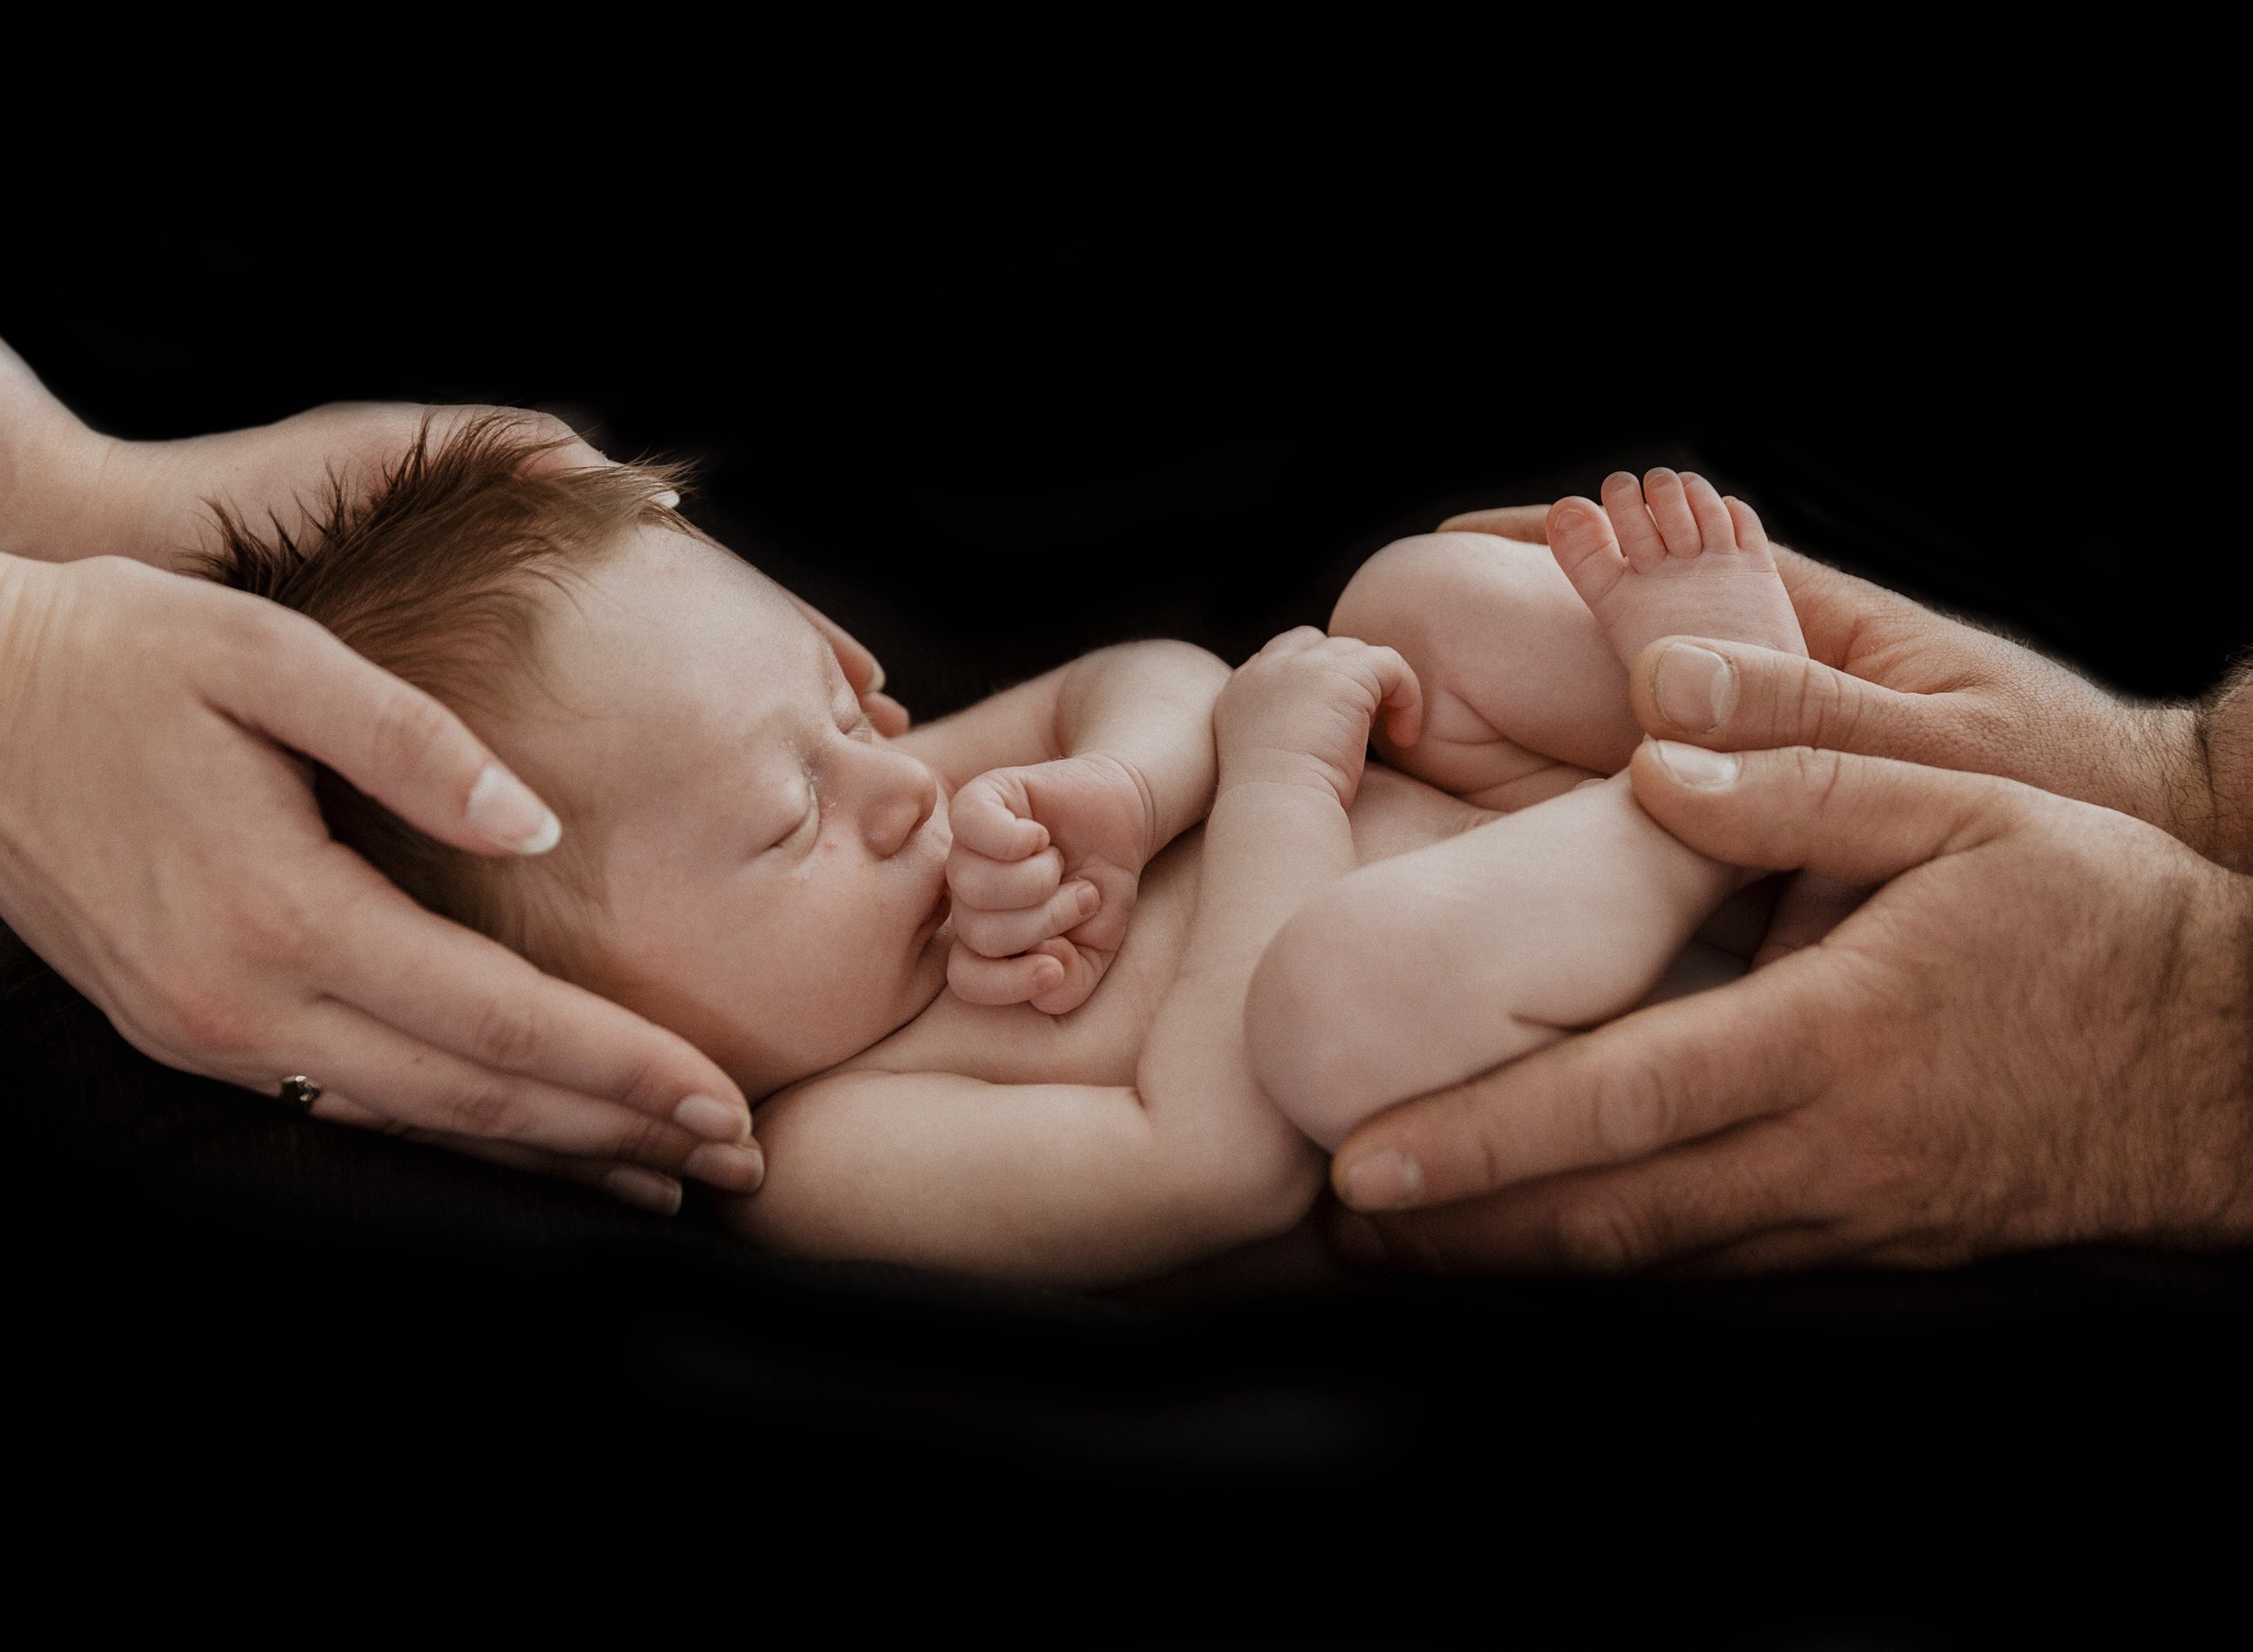 Newborn Portrait Photography